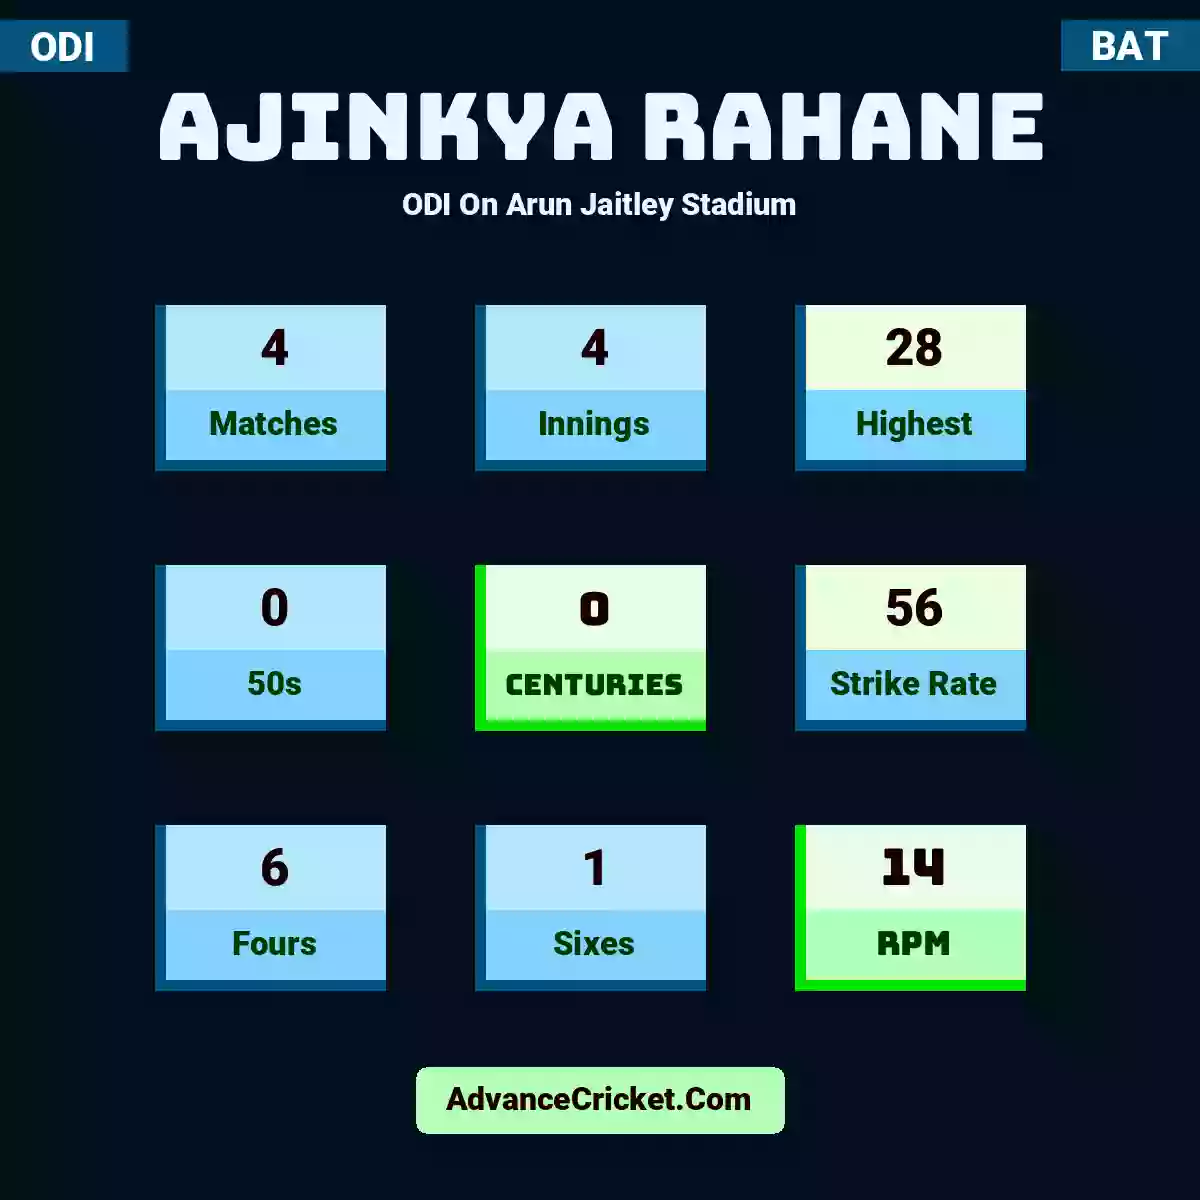 Ajinkya Rahane ODI  On Arun Jaitley Stadium, Ajinkya Rahane played 4 matches, scored 28 runs as highest, 0 half-centuries, and 0 centuries, with a strike rate of 56. A.Rahane hit 6 fours and 1 sixes, with an RPM of 14.